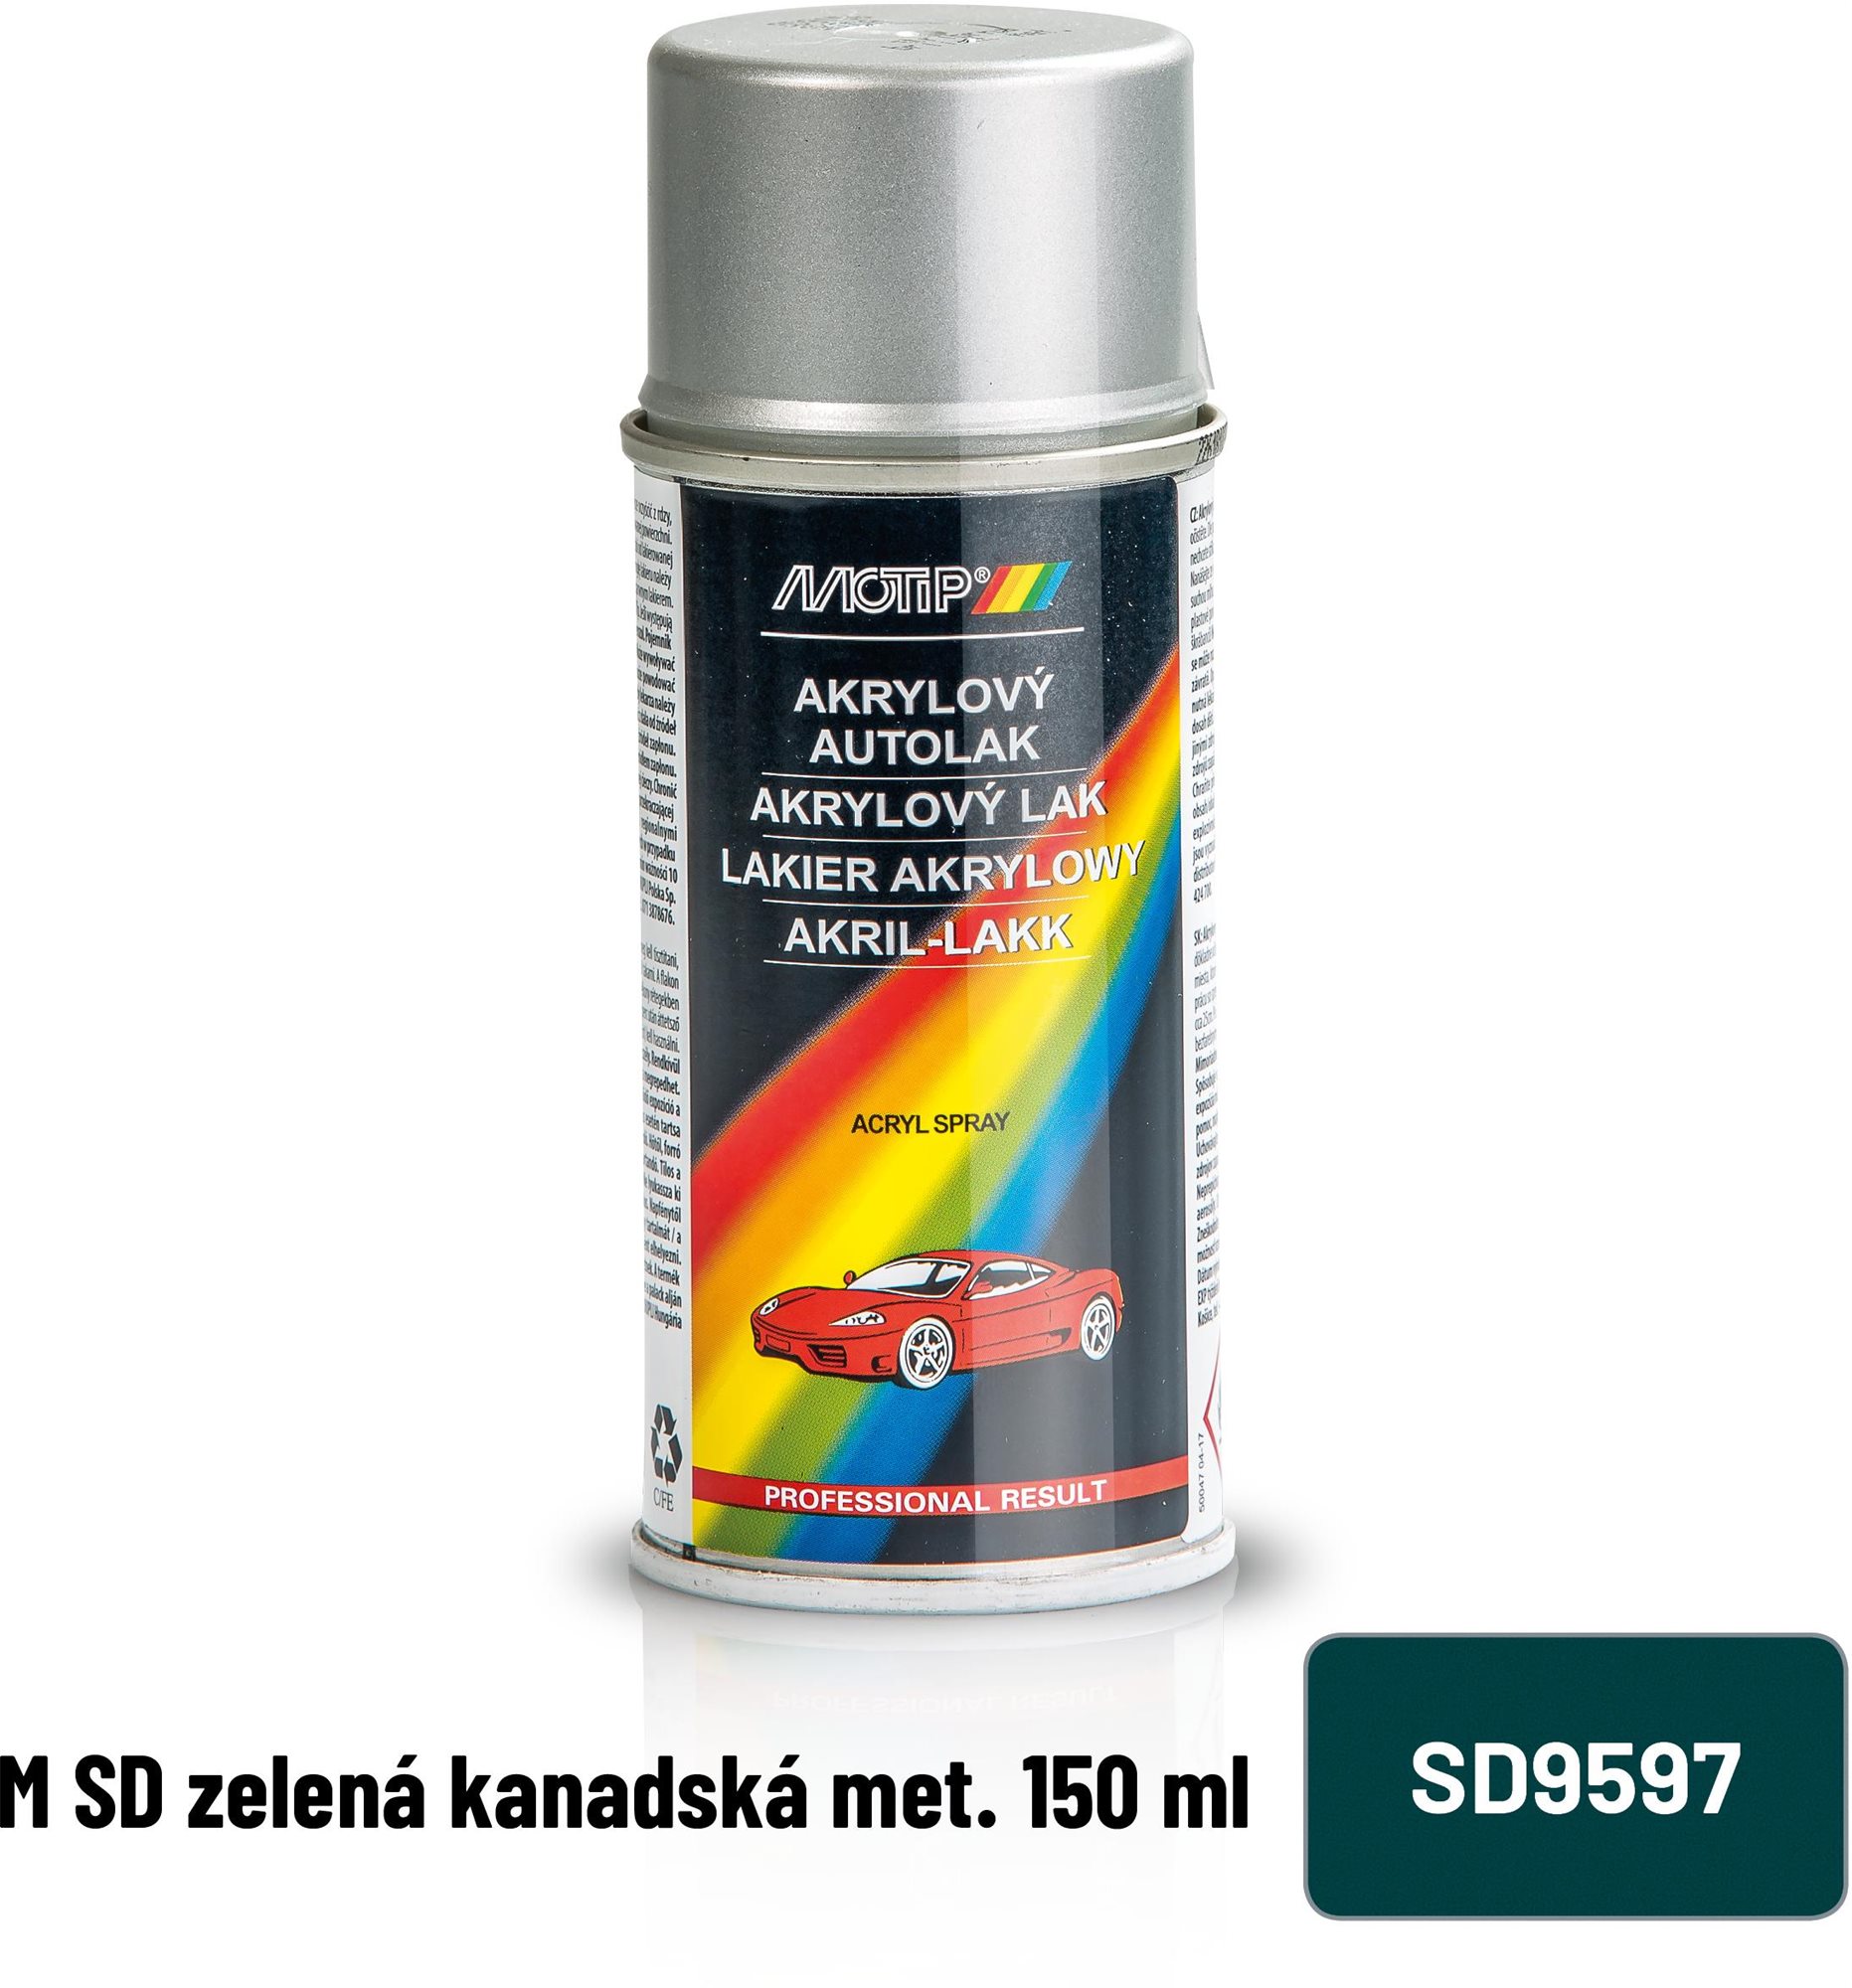 Festékspray MOTIP M SD z. kanadai metál 150 ml